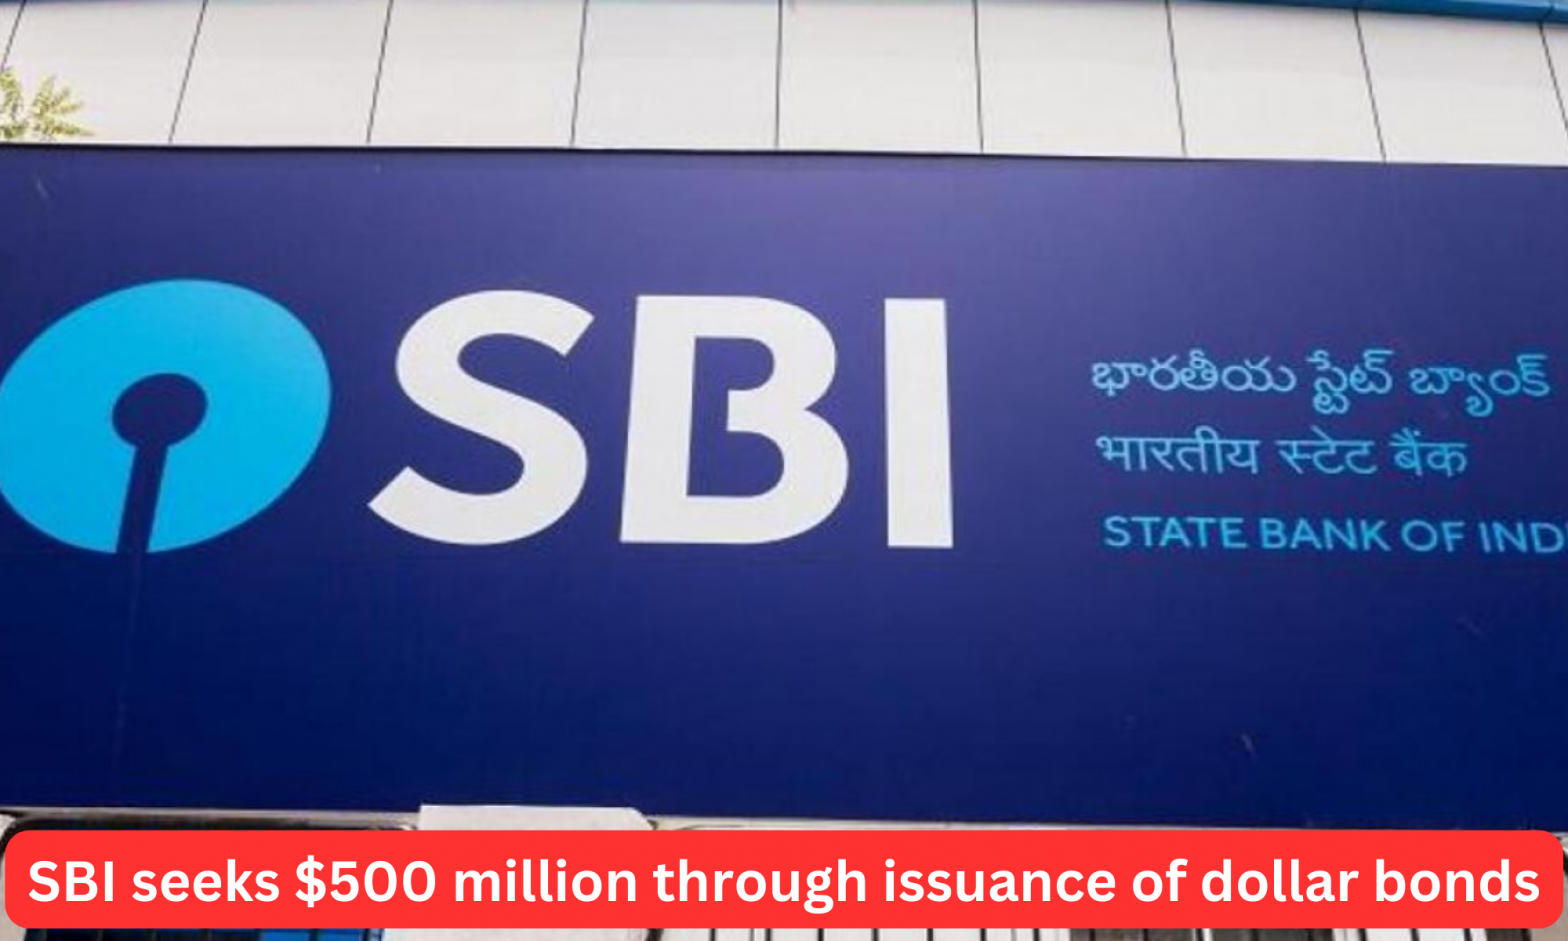 SBI seeks $500 million through issuance of dollar bonds